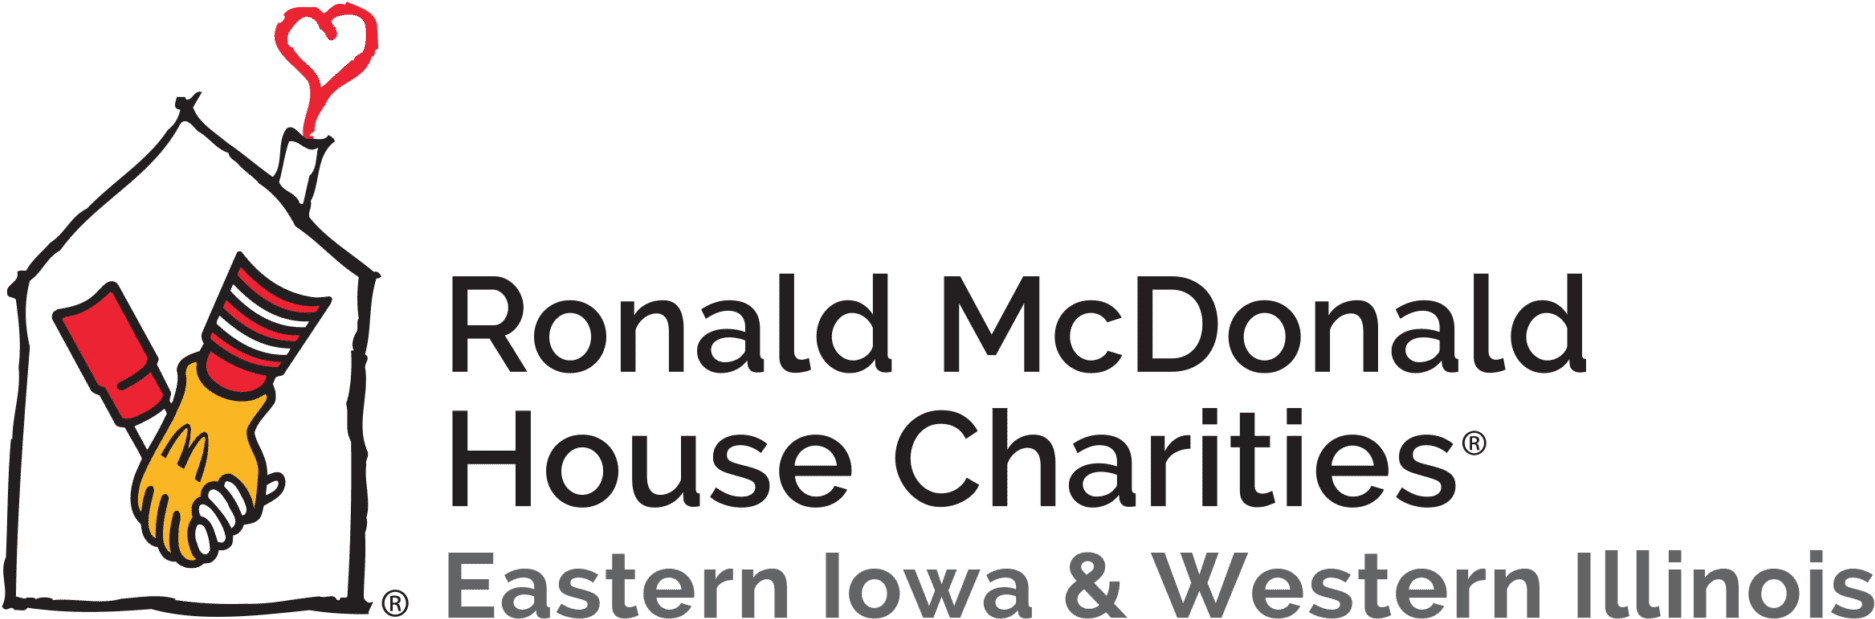 Ronald Mc Donald House Charities Logo PNG